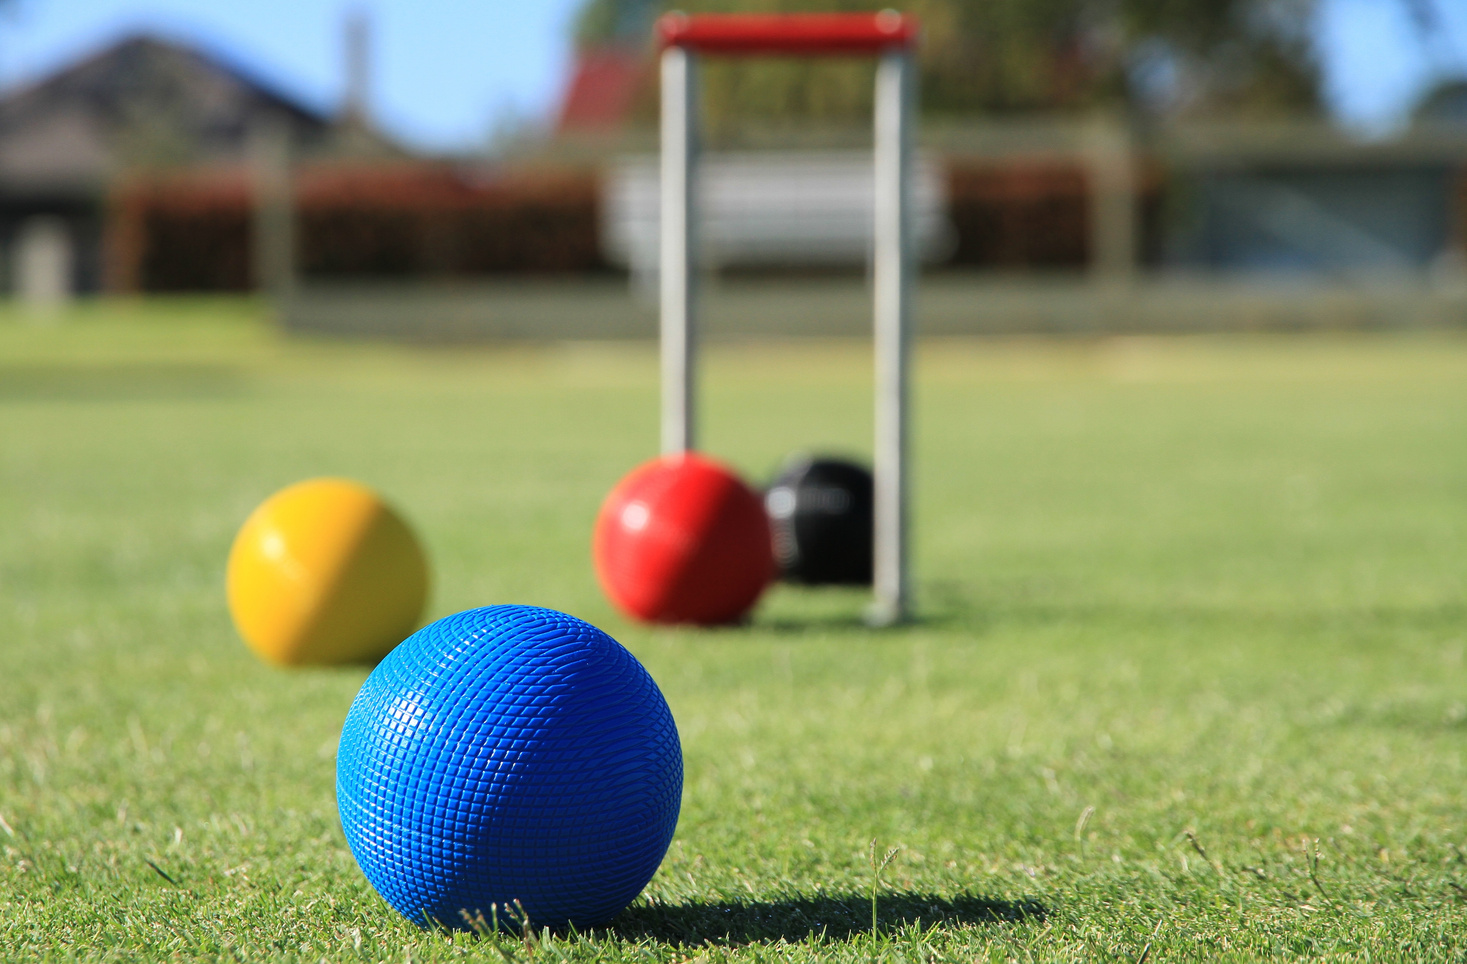 Croquet balls on a croquet lawn